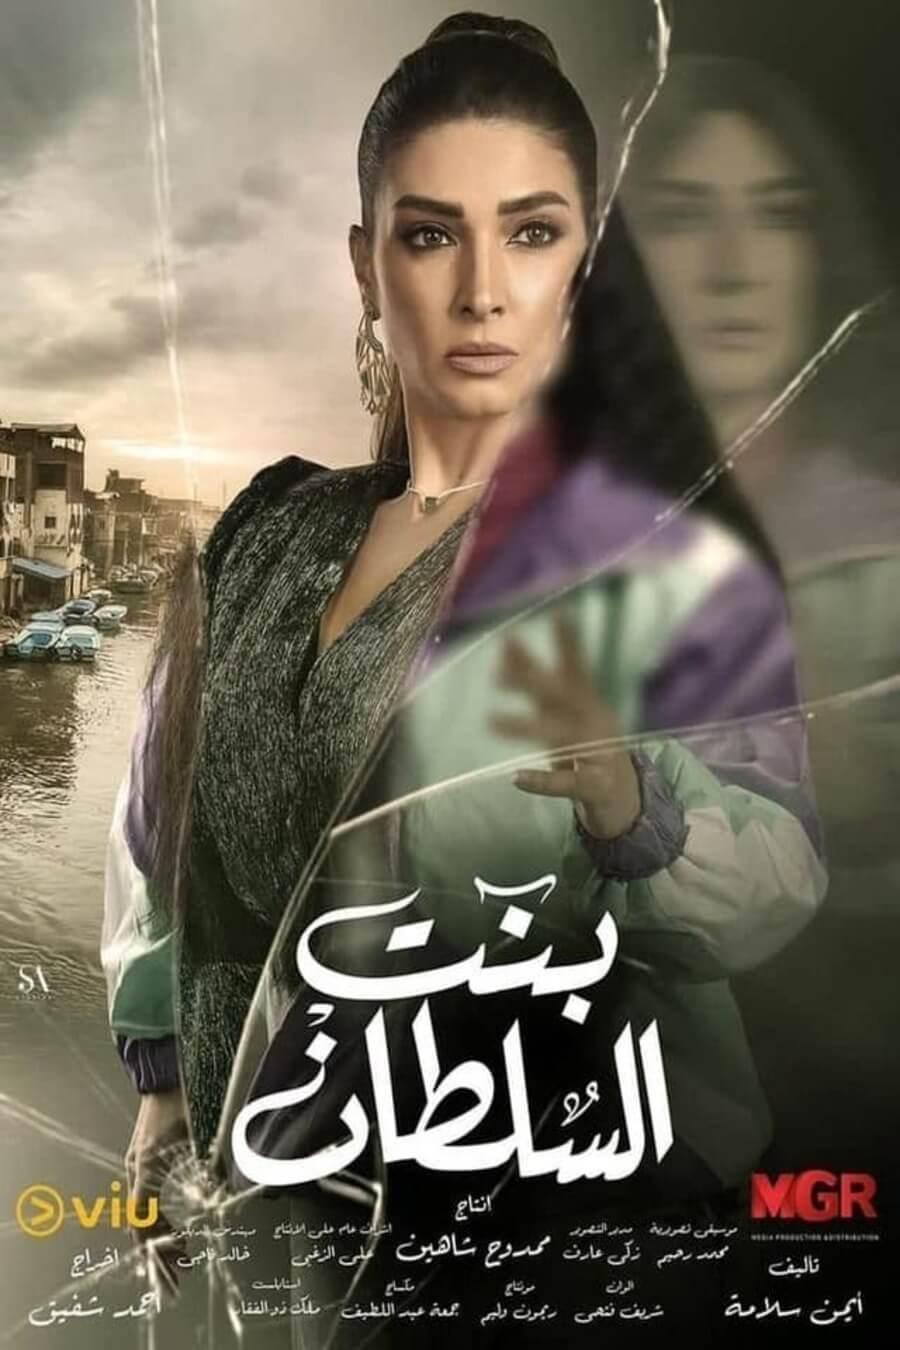 TV ratings for Bint El Sultan (بنت السلطان) in Philippines. viu TV series